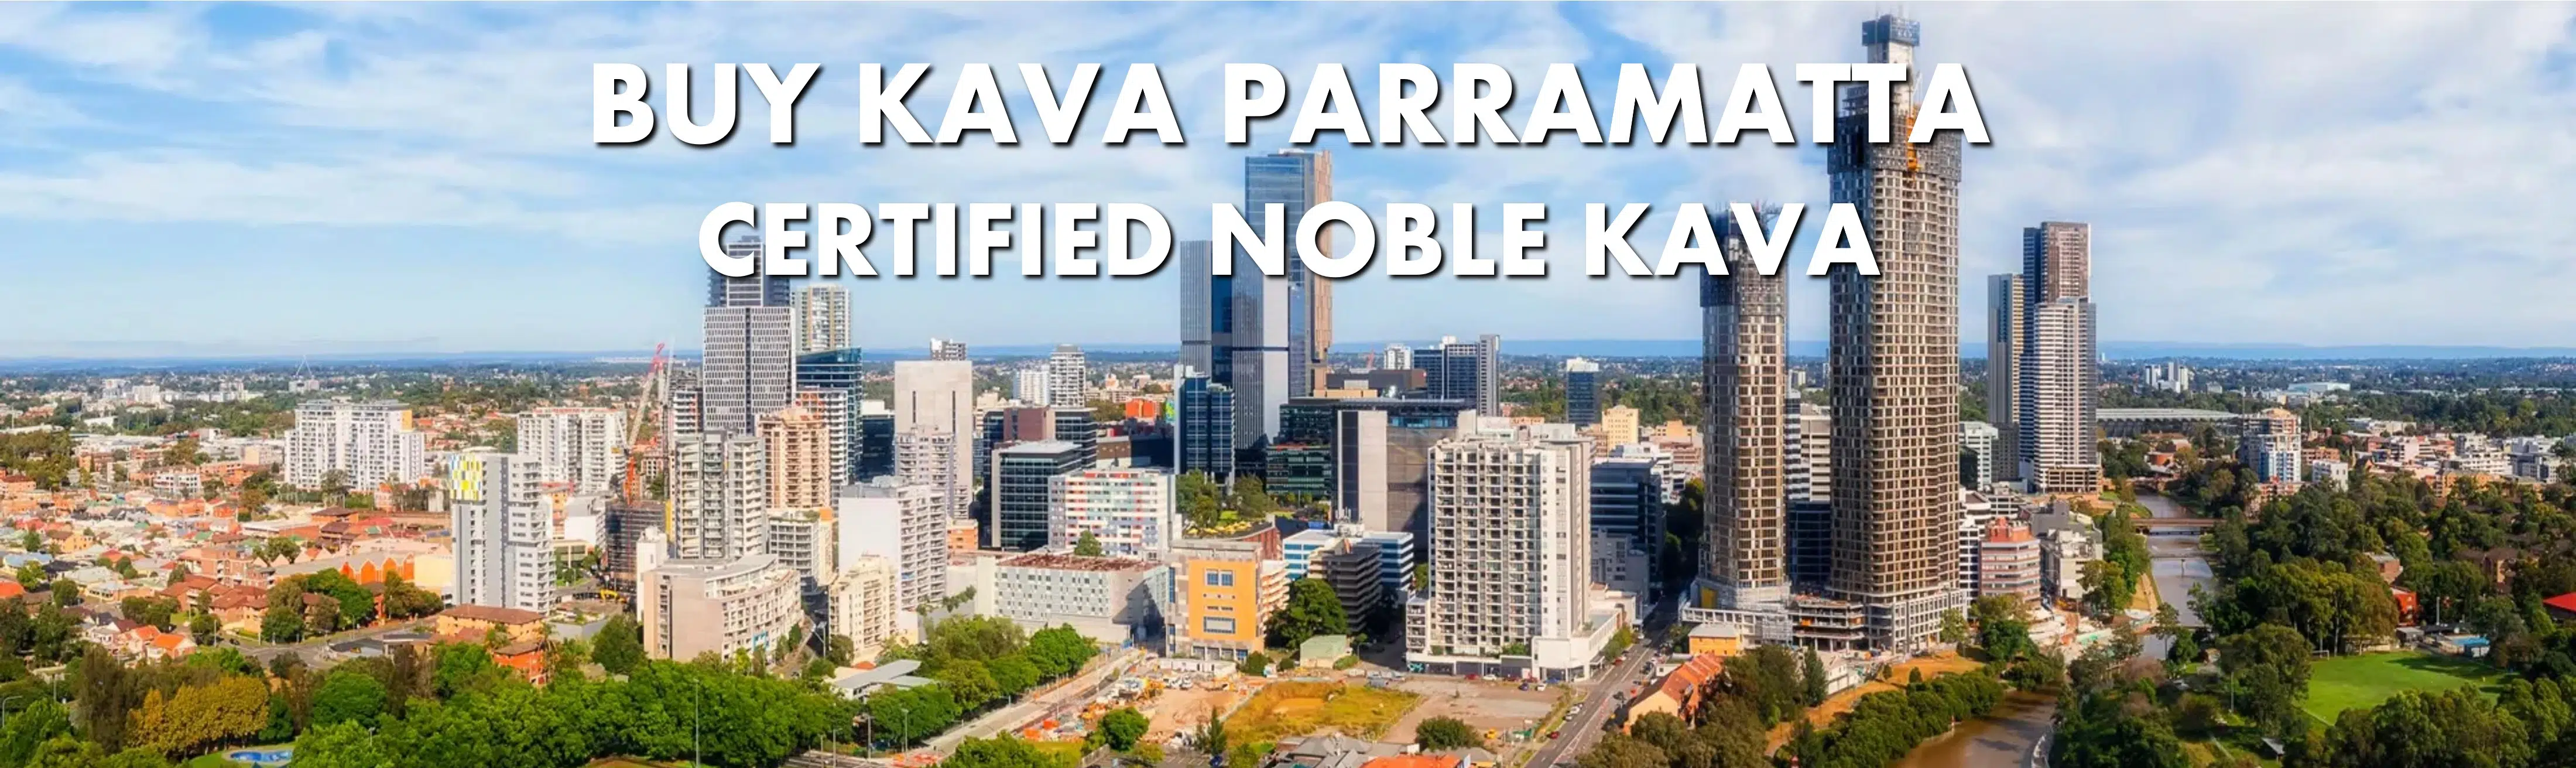 View of Parramatta CBD with caption - Buy Kava Parramatta Certified Noble Kava